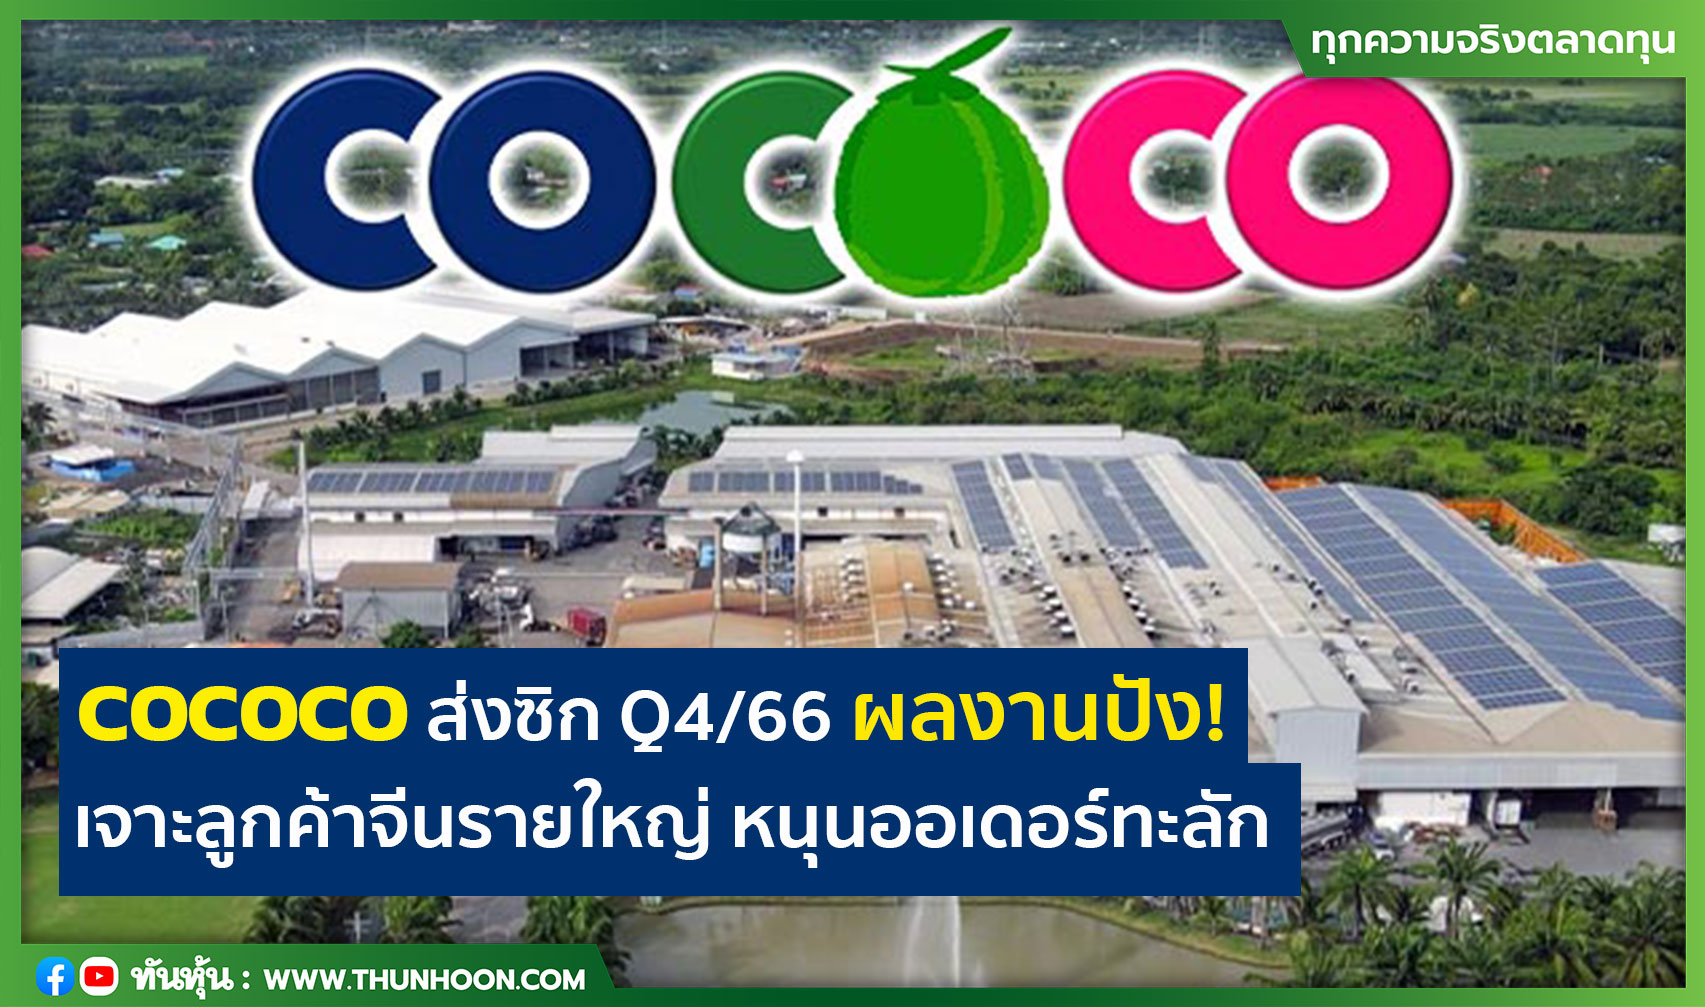 COCOCO ส่งซิก Q4/66 ผลงานปัง!  เจาะลูกค้าจีนรายใหญ่ หนุนออเดอร์ทะลัก